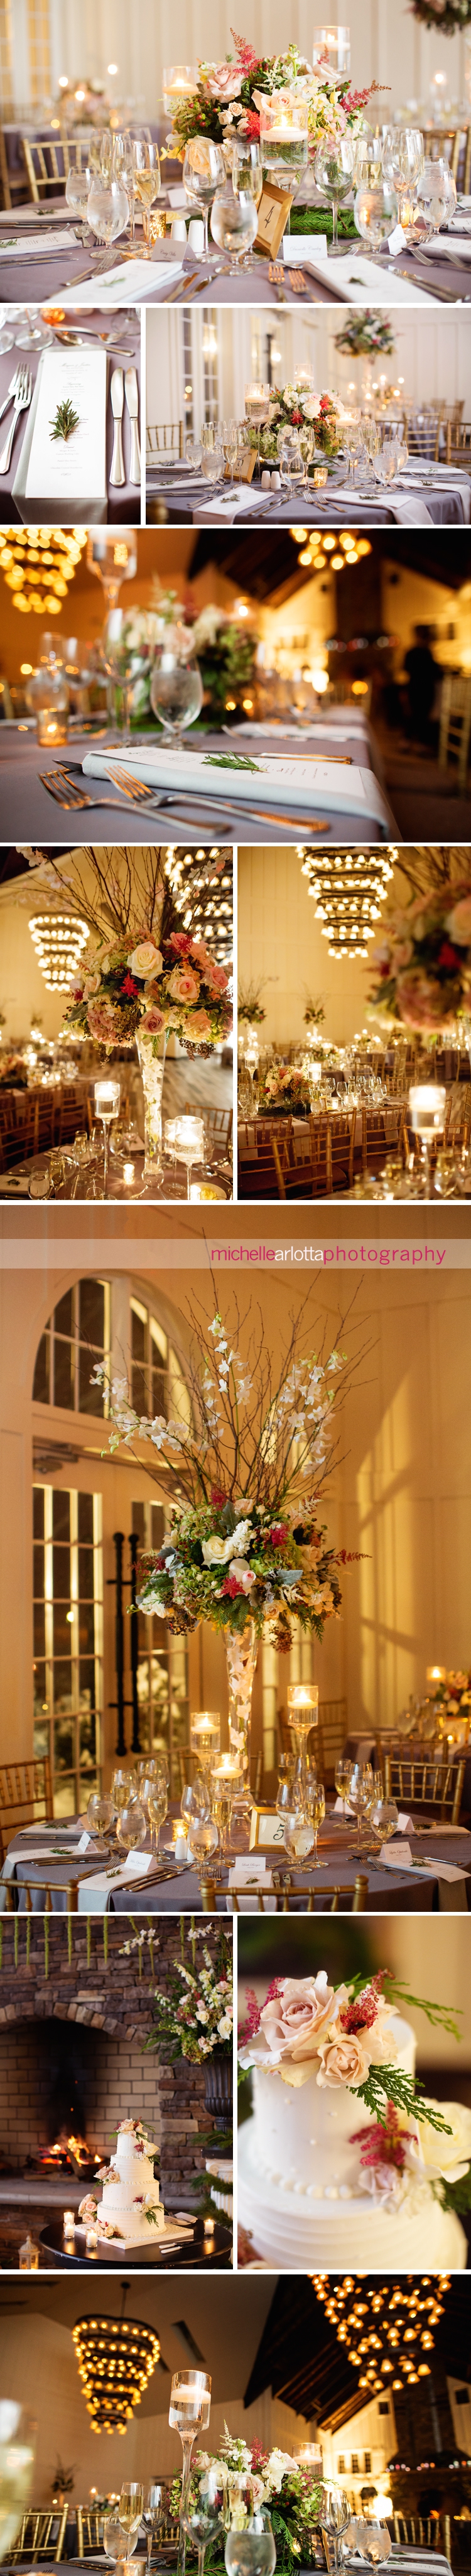 details of Ryland inn coach house ballroom winter wedding with crest florist